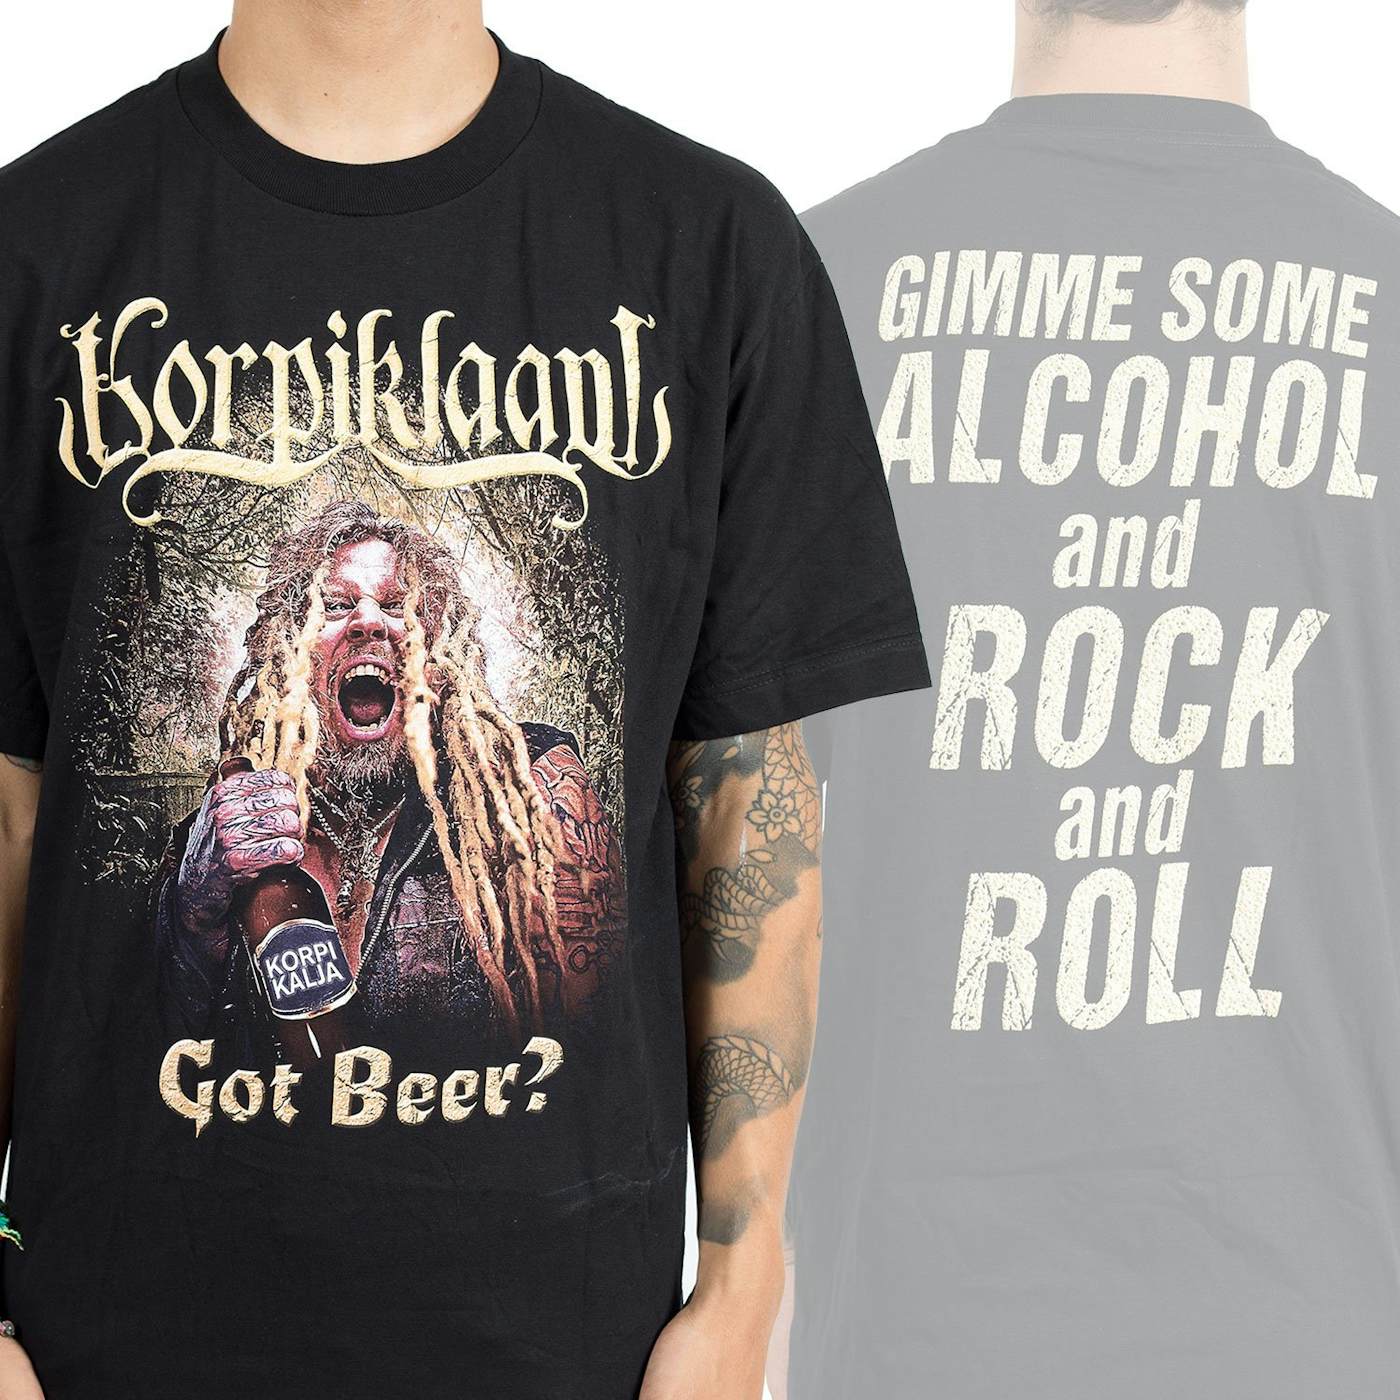 Korpiklaani "Got Beer" T-Shirt